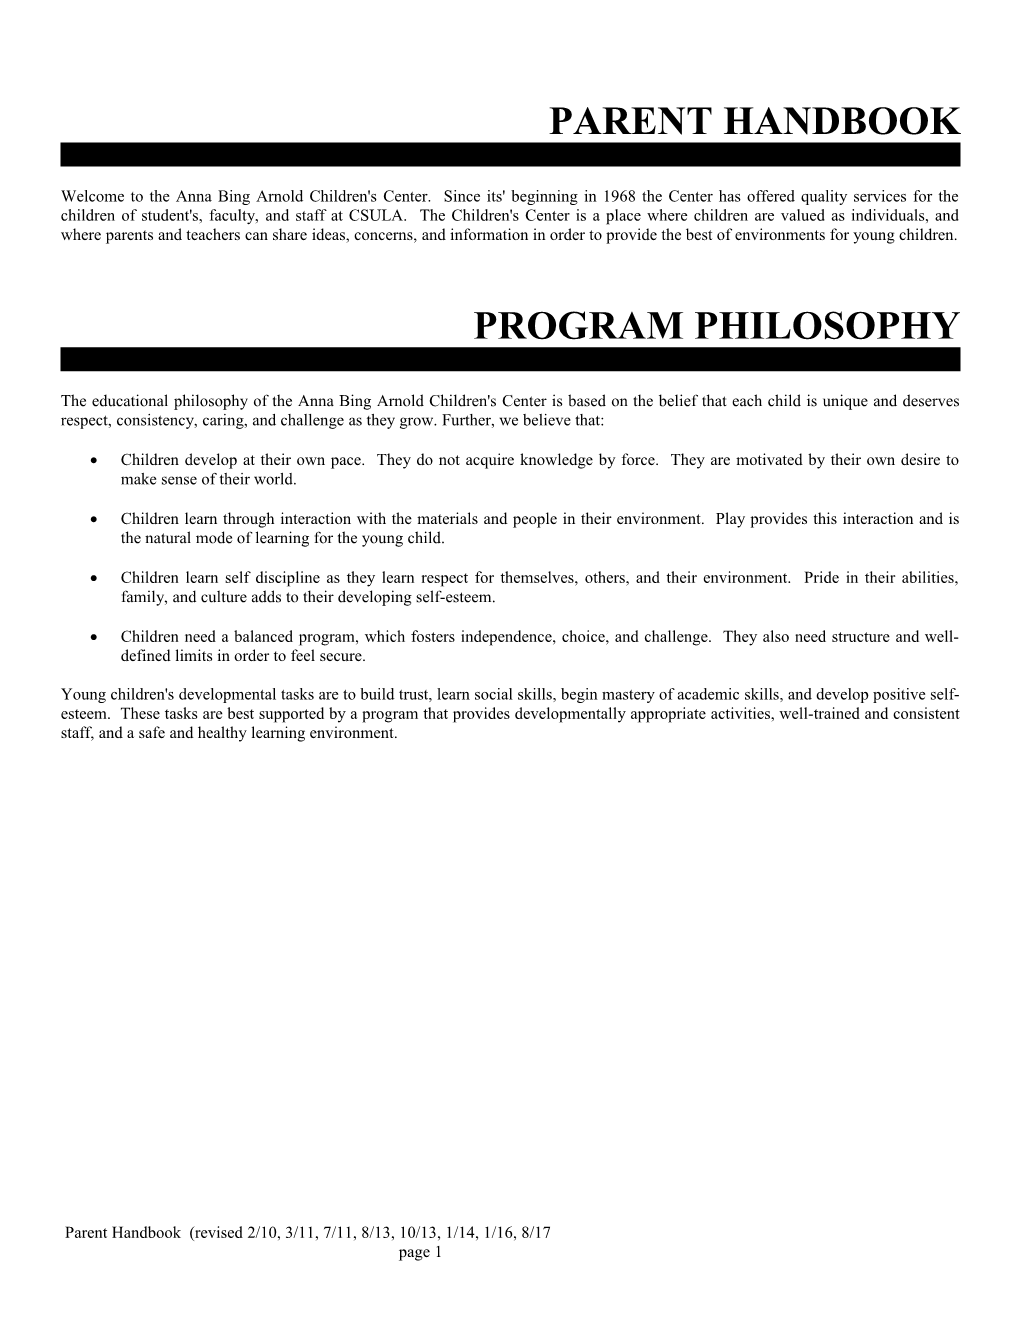 Program Philosophy